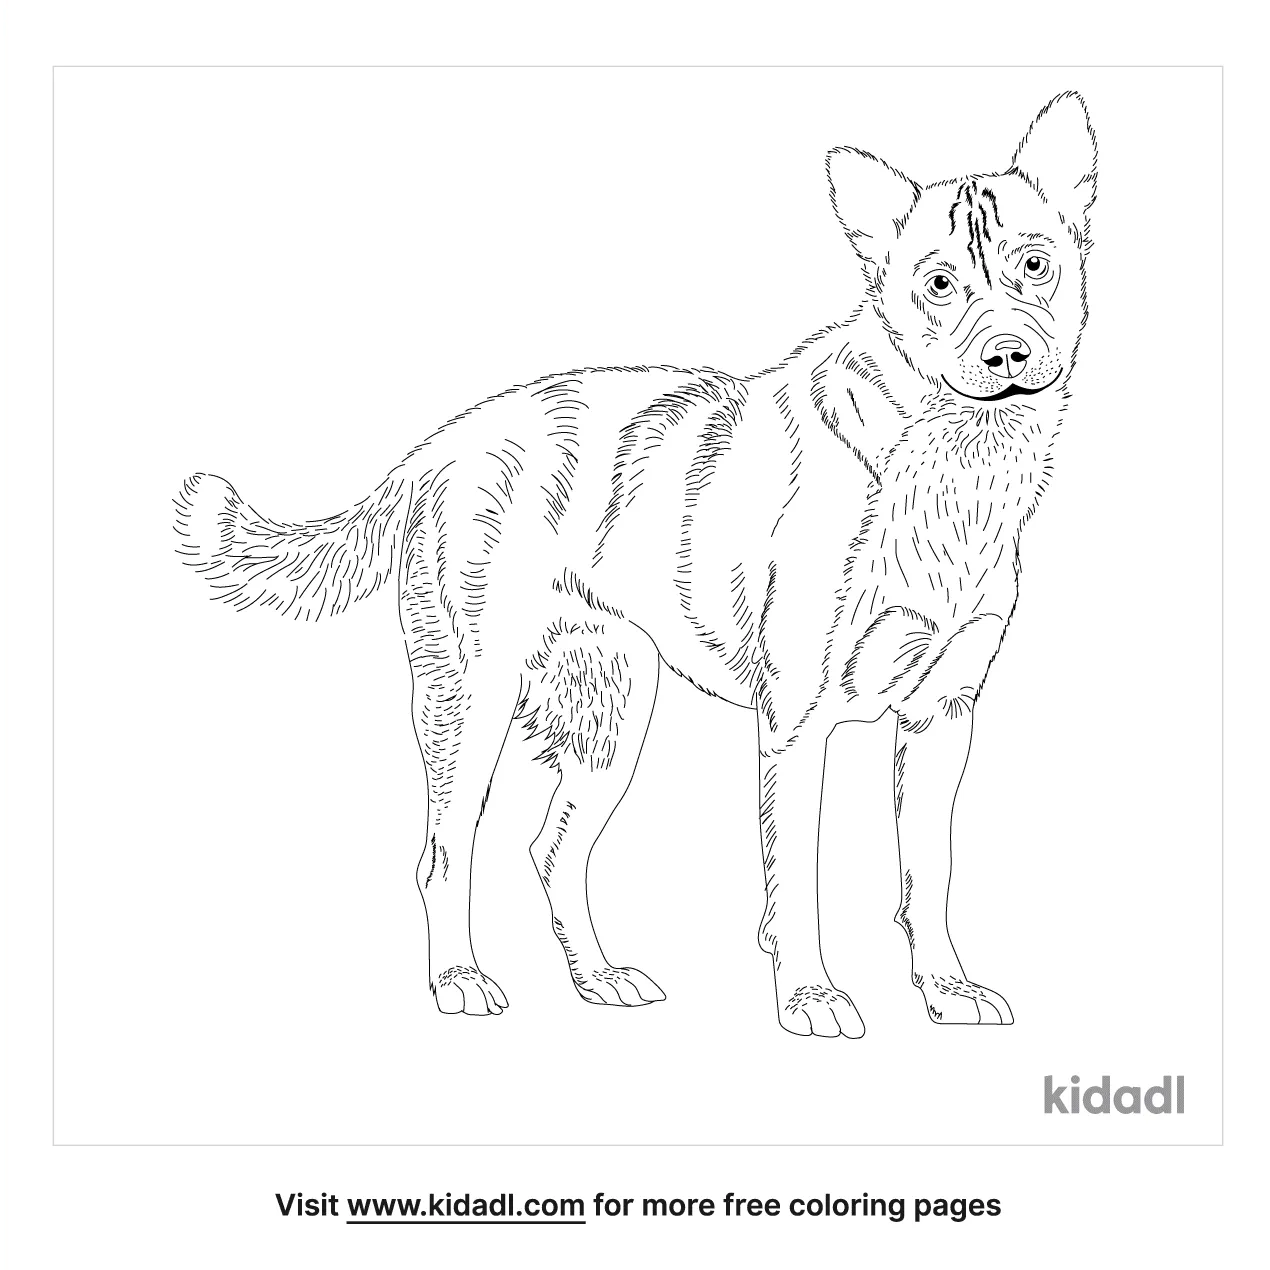 Akita Shepherd Coloring Page   Free Dogs Coloring Page   Kidadl